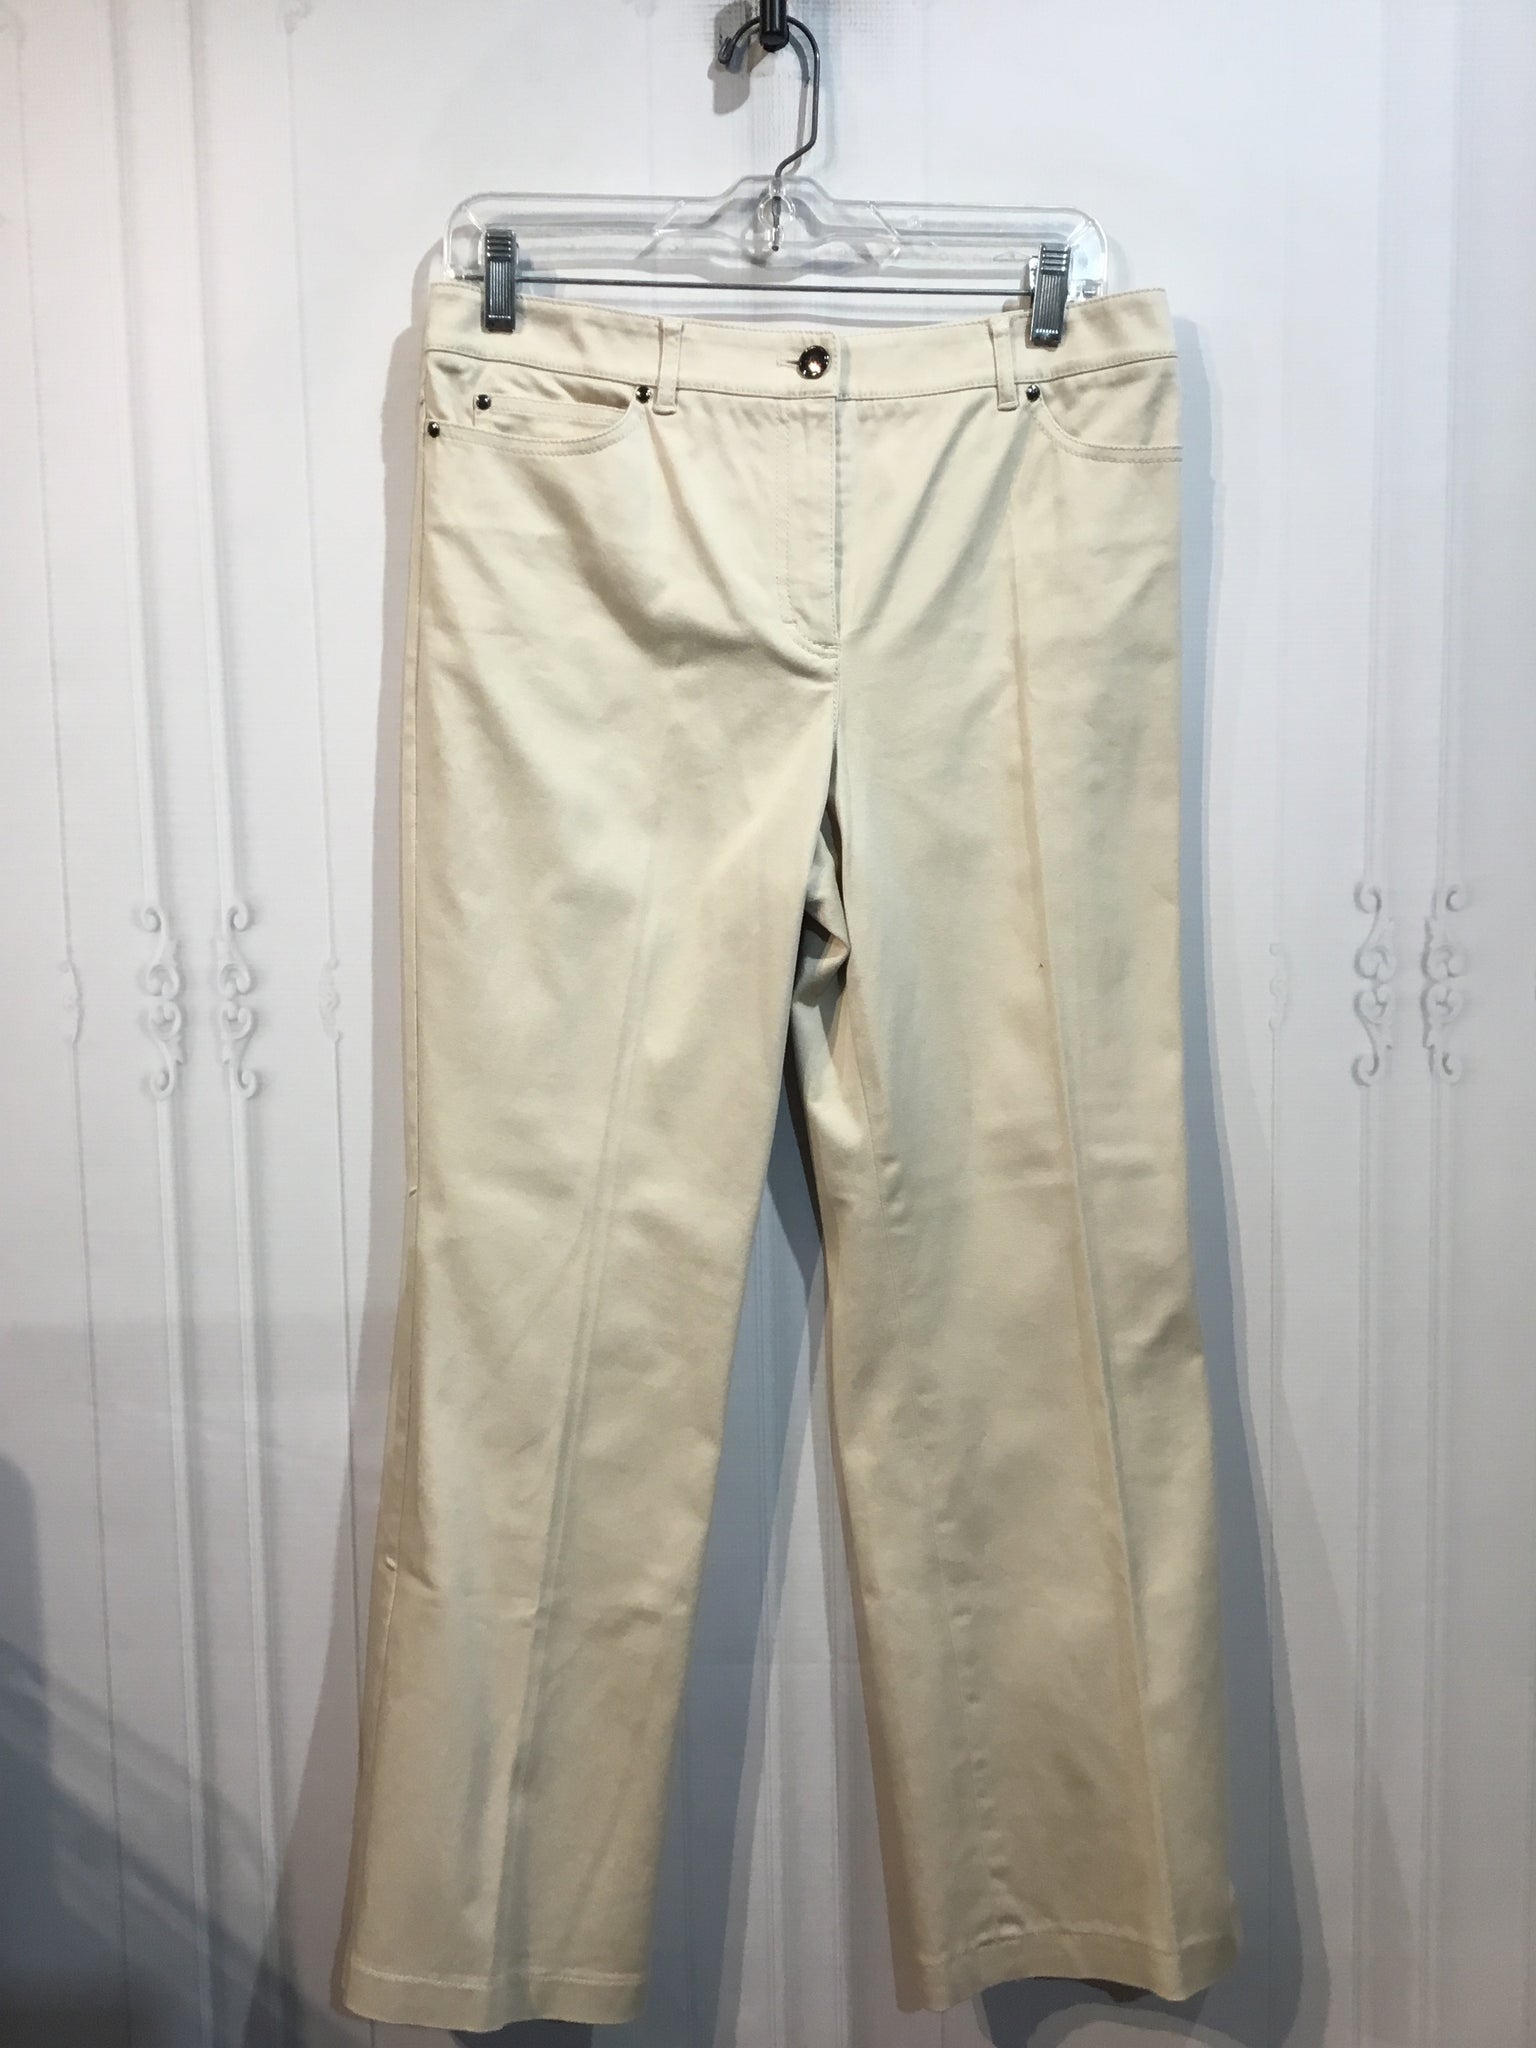 Carlisle Size L/12-14 Cream Pants